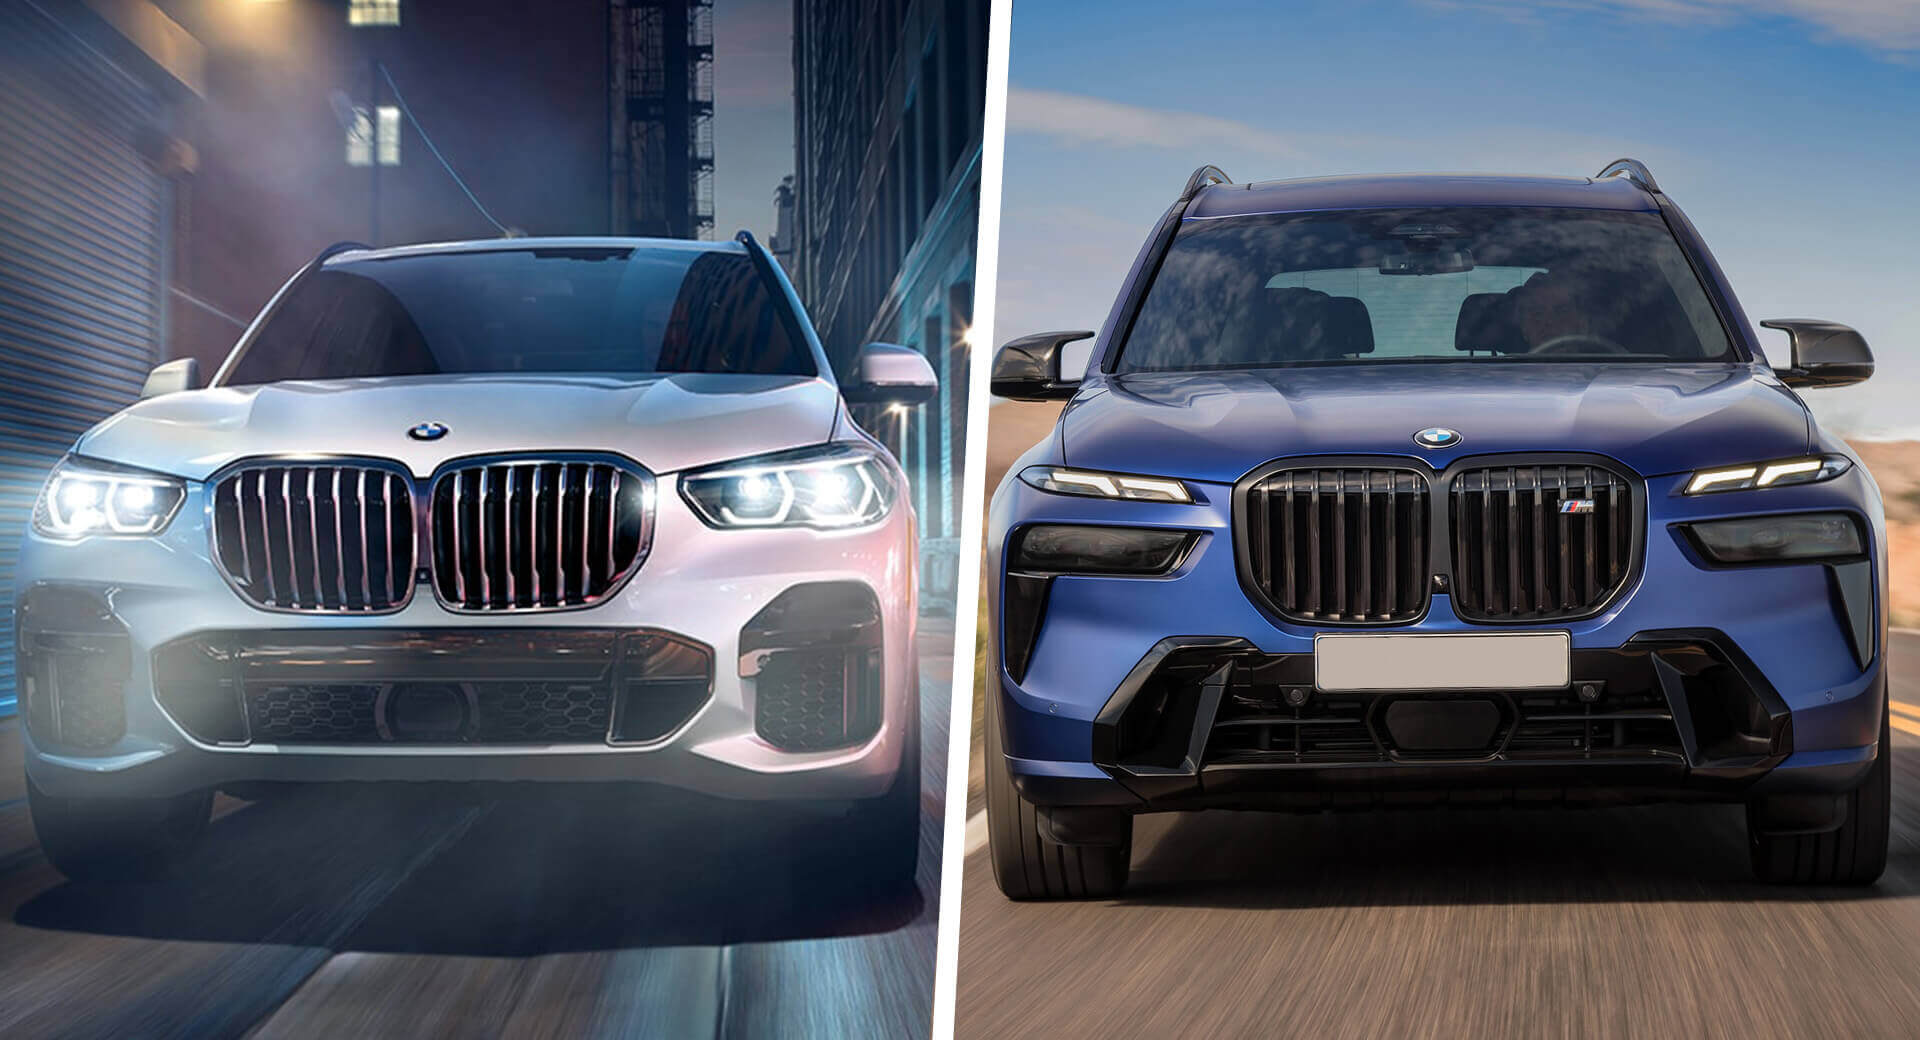 BMW X5 vs X7 Technology